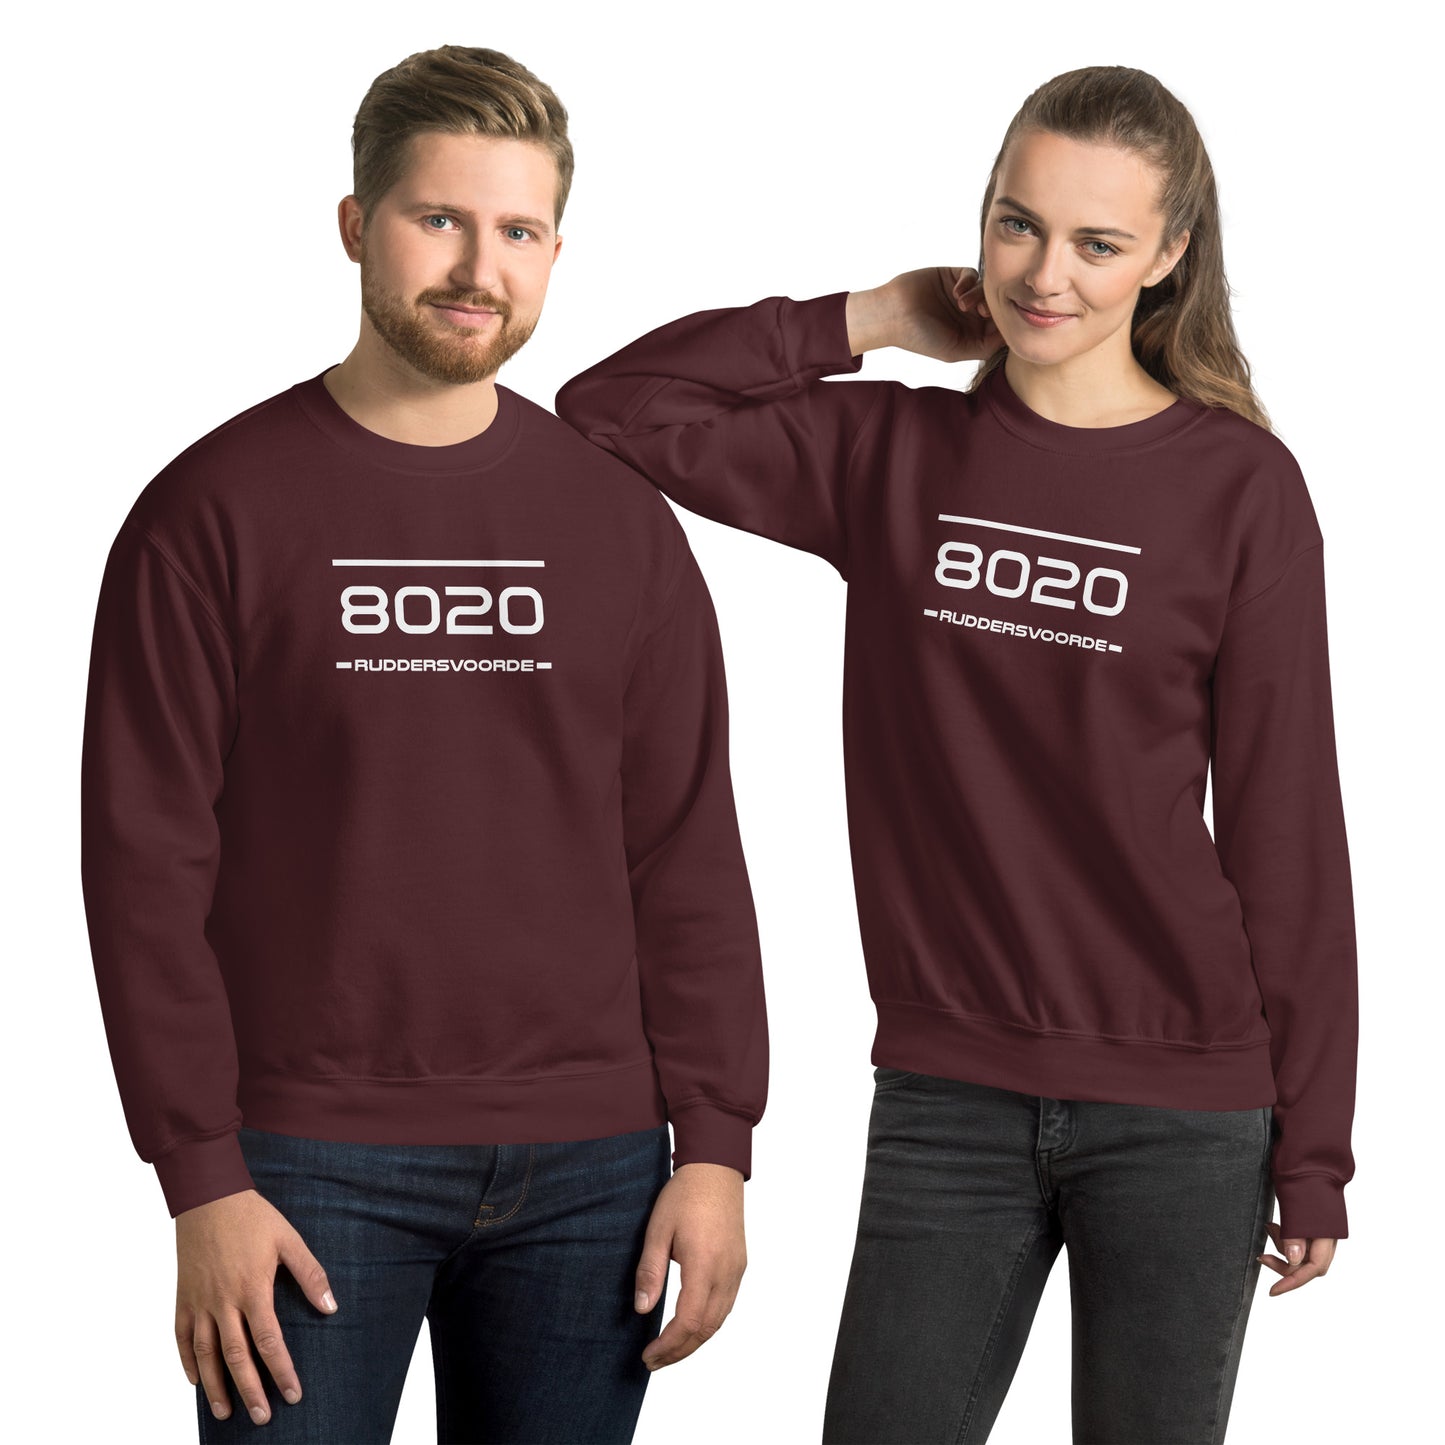 Sweater - 8020 - Ruddersvoorde (M/V)